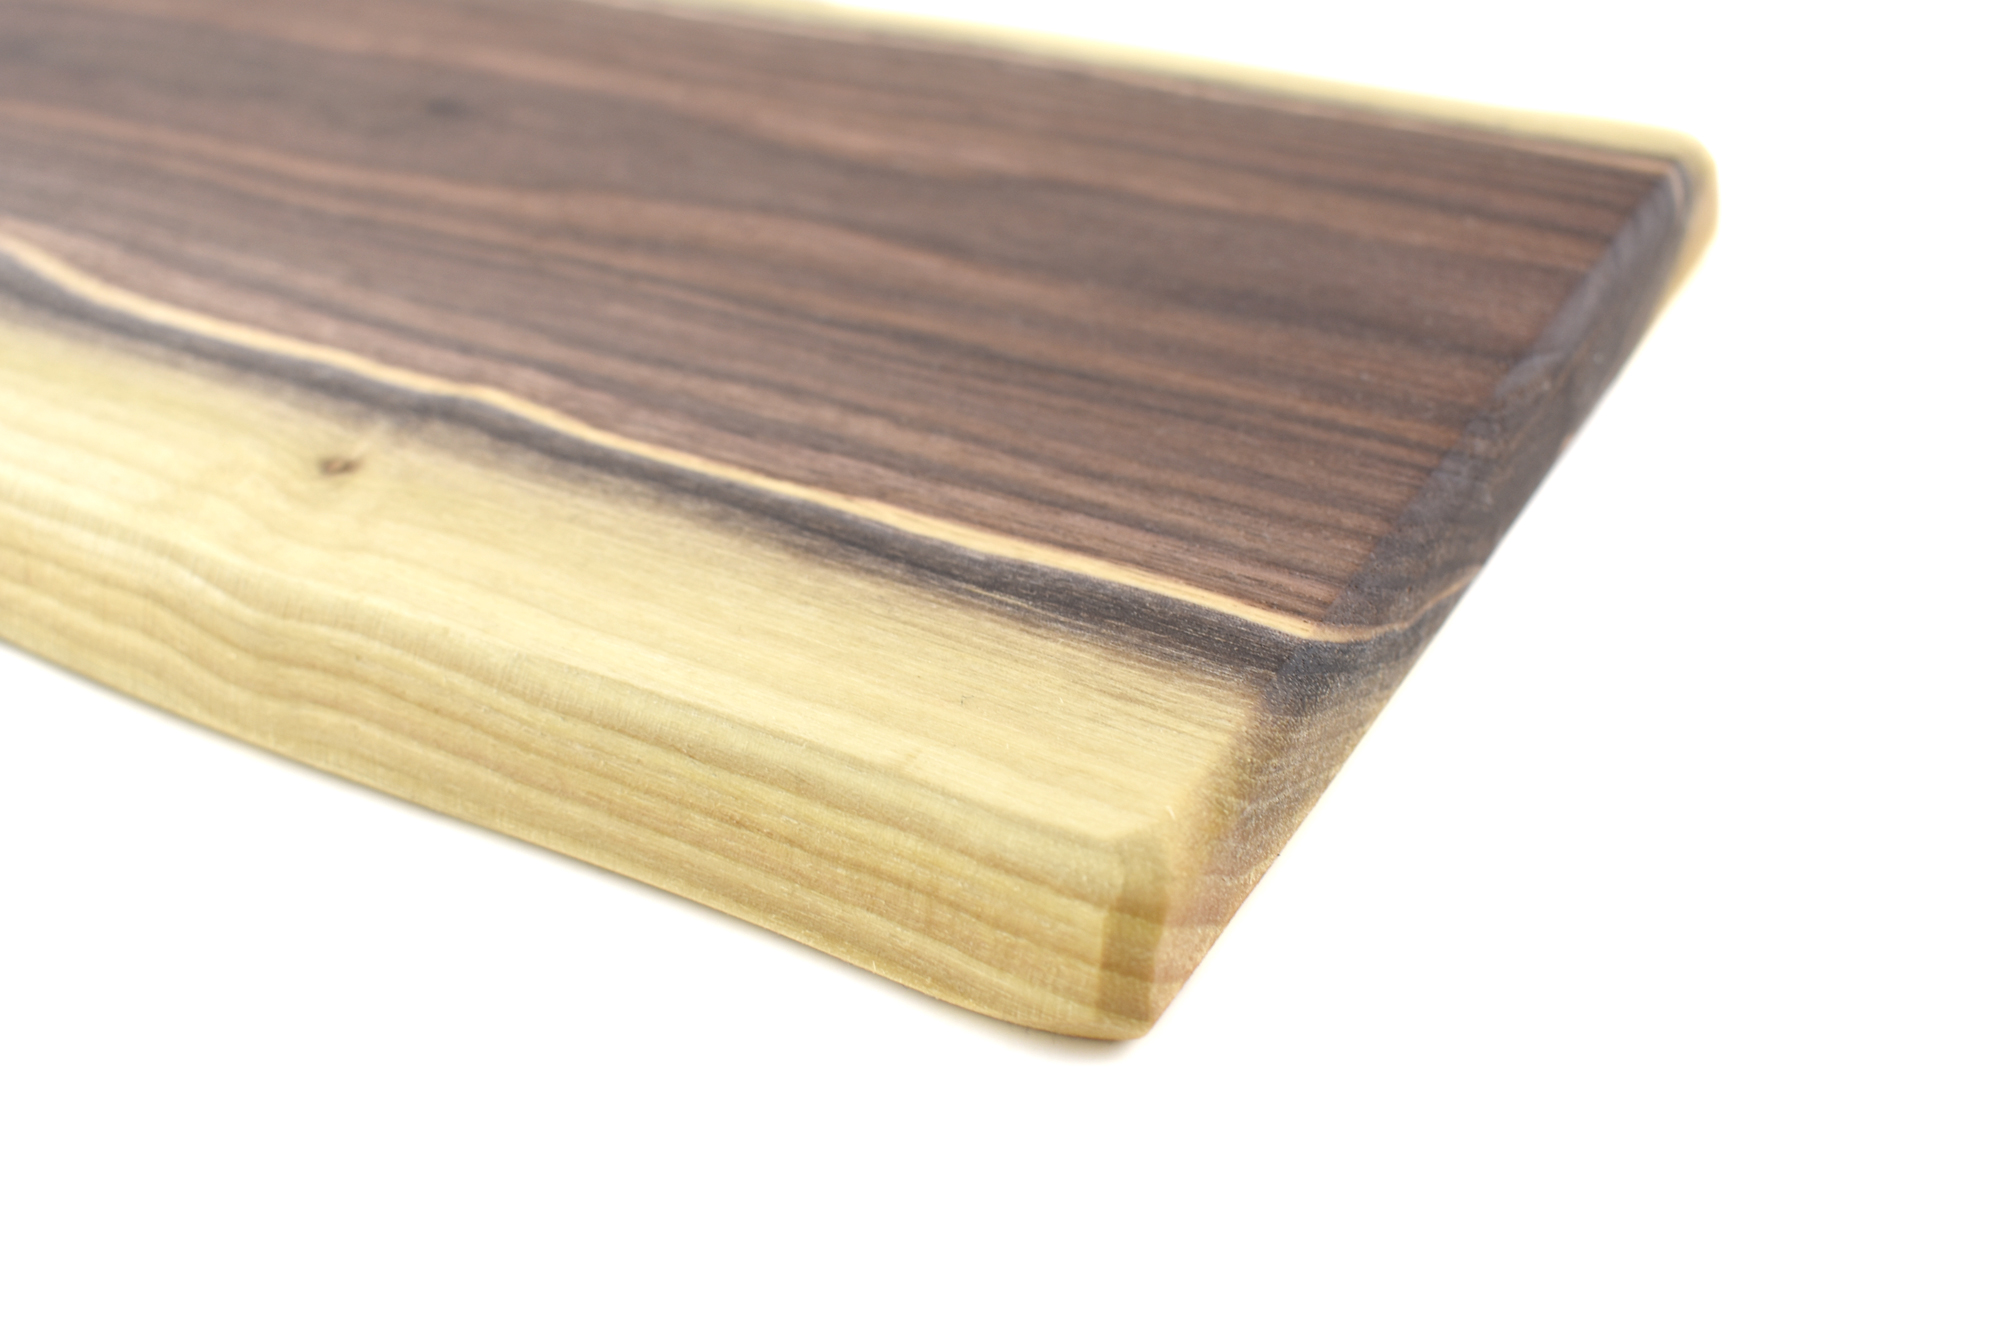 Live edge walnut wood charcuterie board with 4" handle